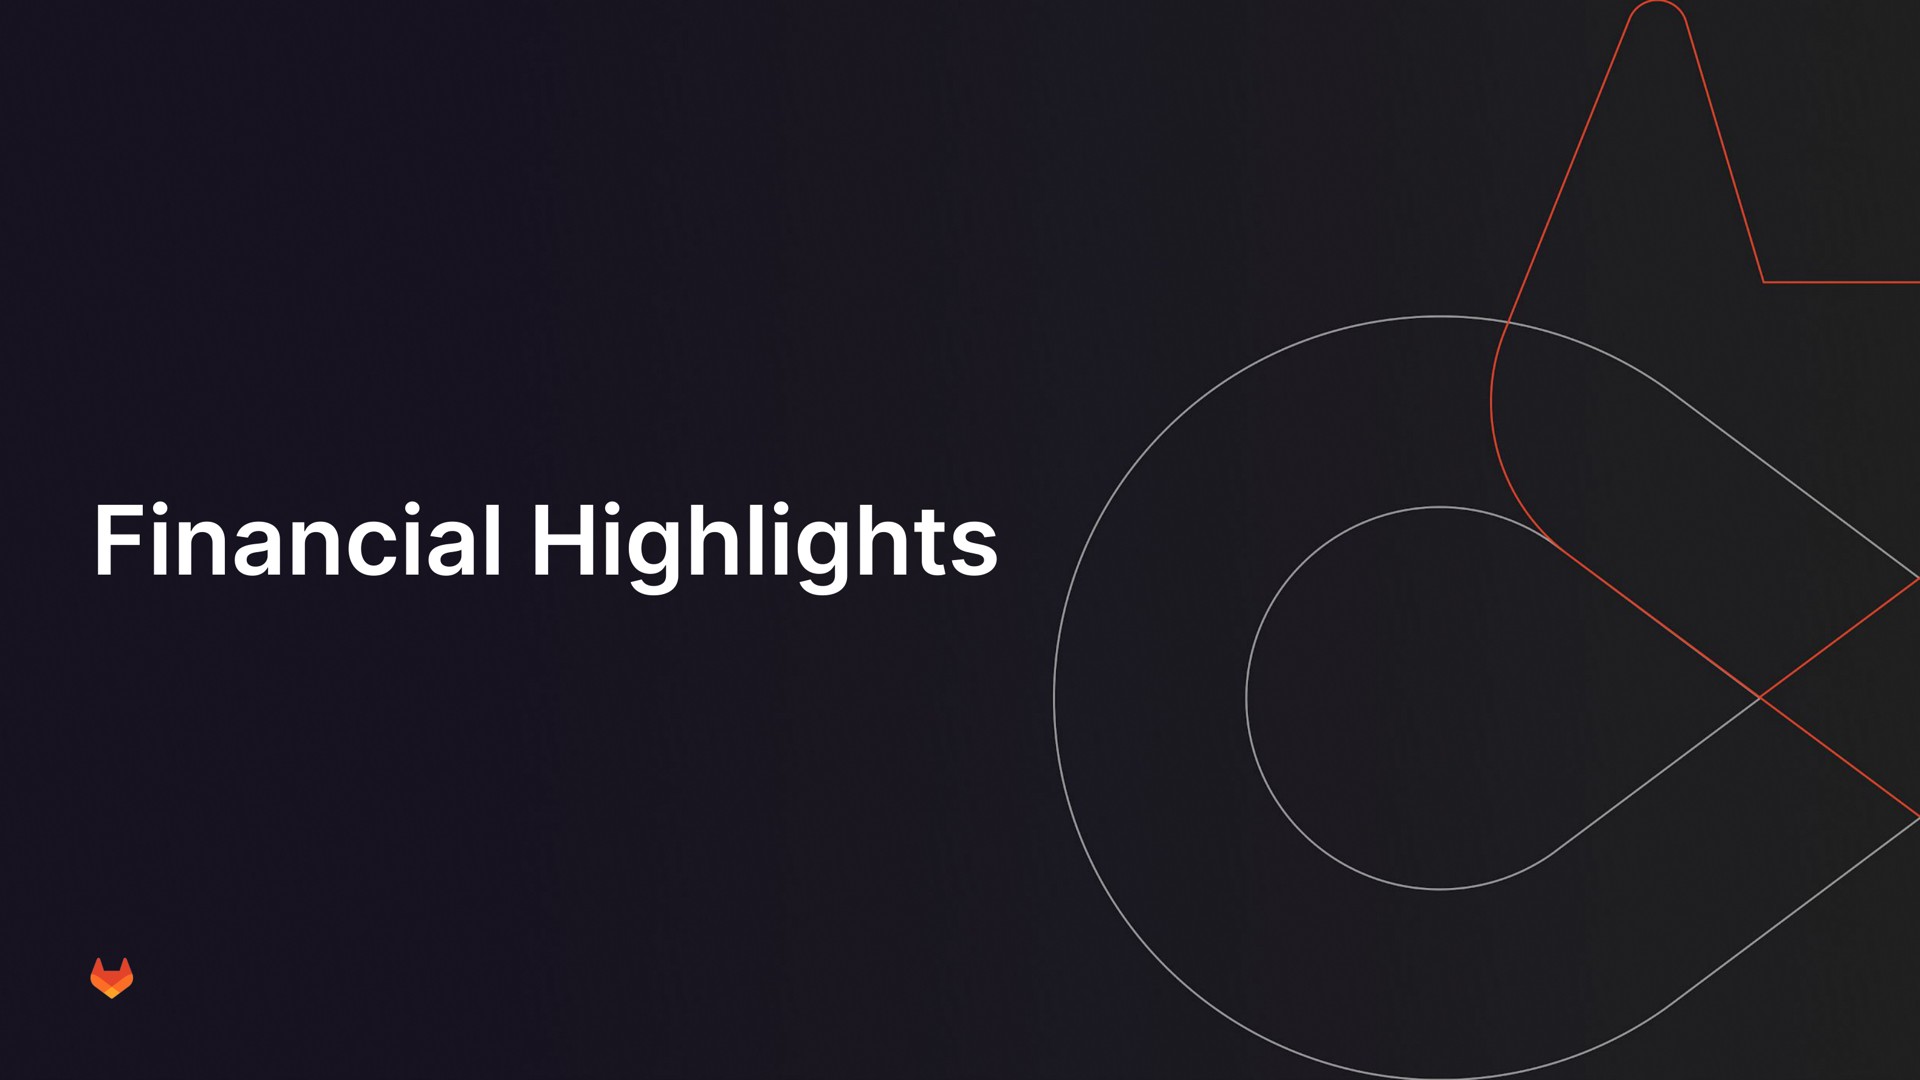 financial highlights | GitLab